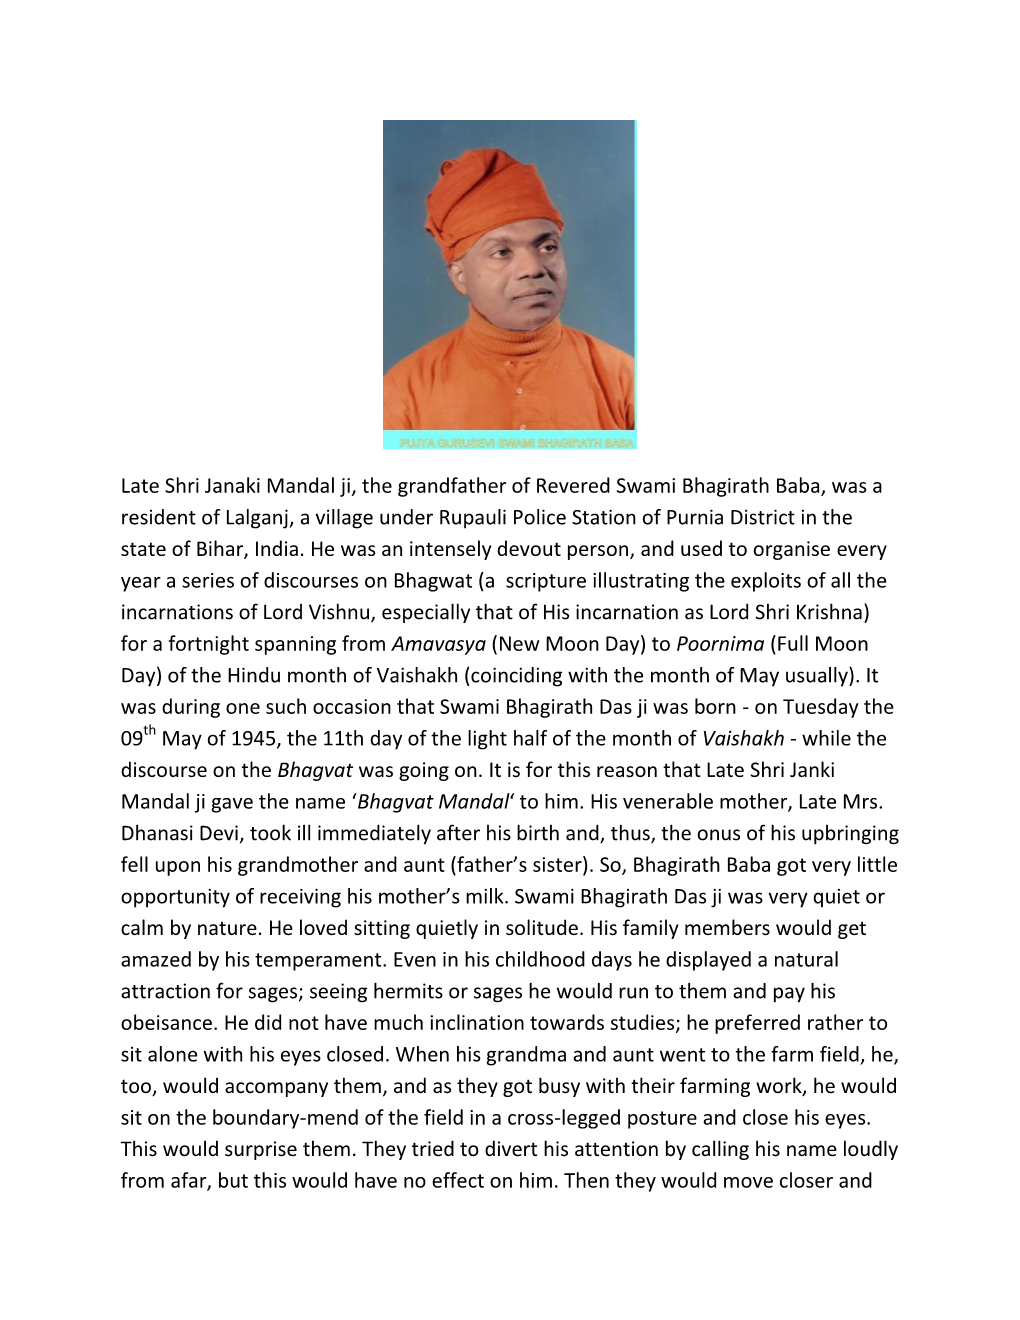 Late Shri Janaki Mandal Ji, the Grandfather of Revered Swami